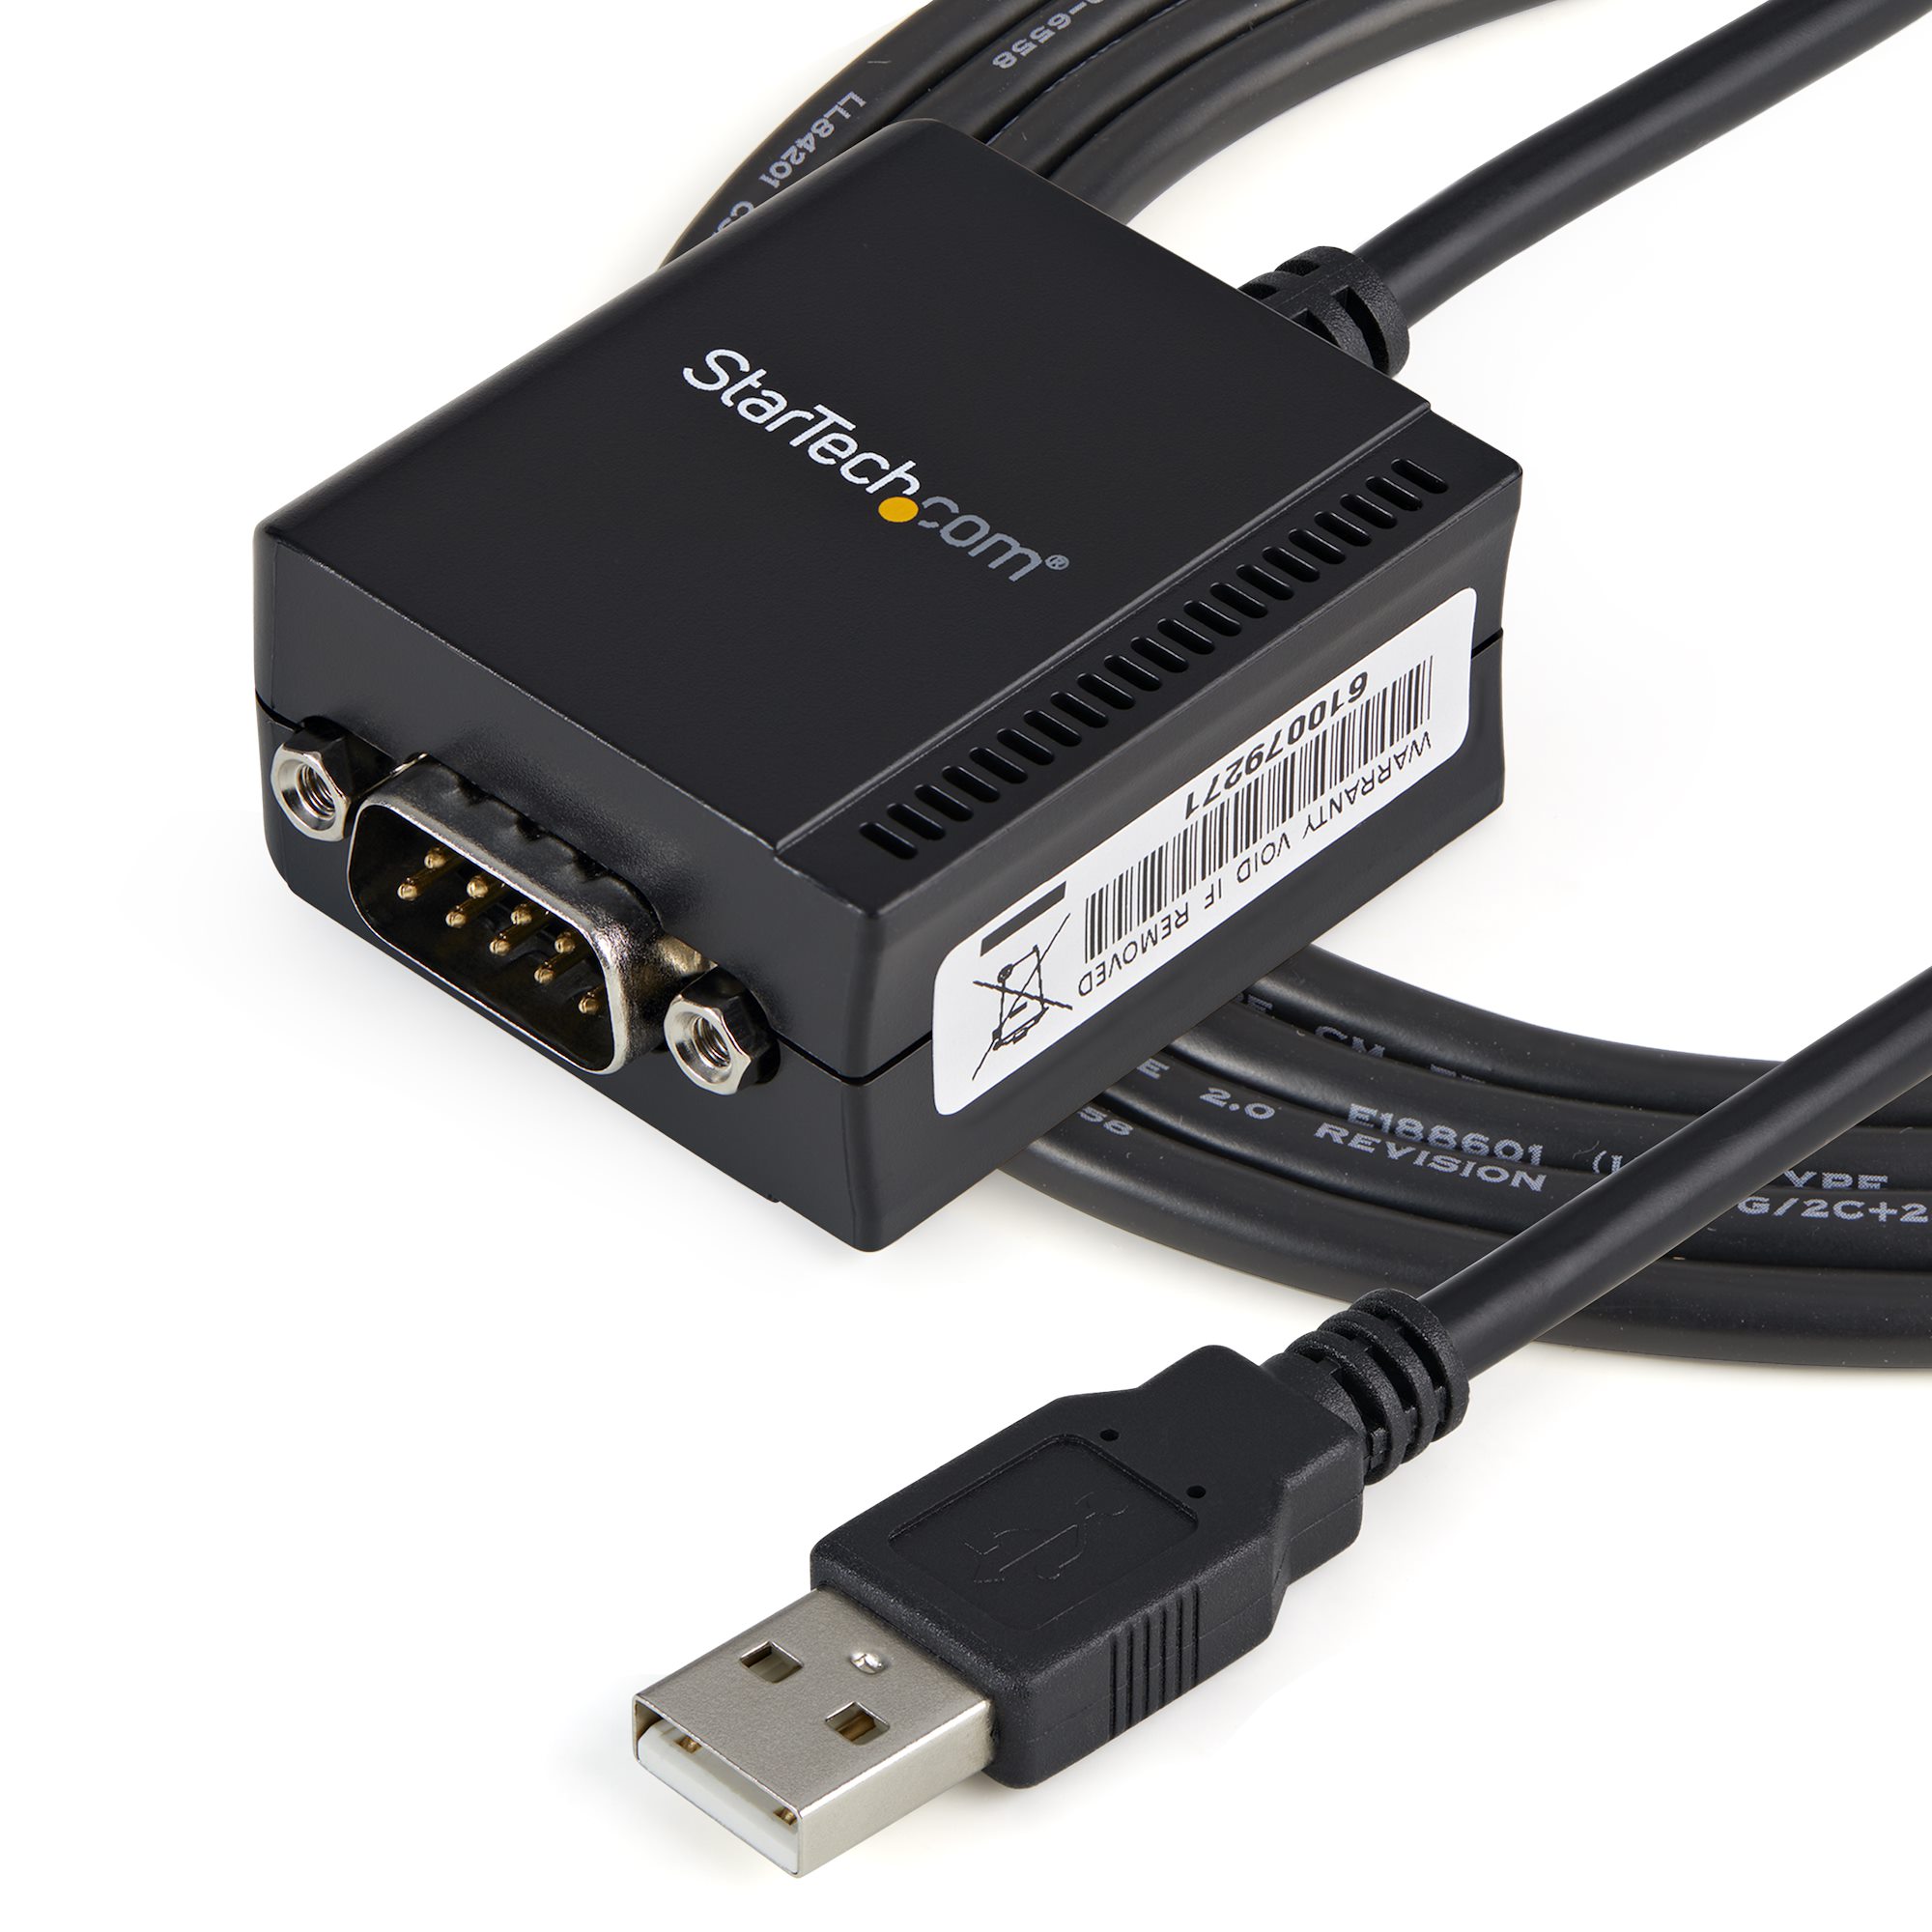 årsag Agurk halvø FTDI USB to Serial Adapter Cable w/ COM - Serial Cards & Adapters |  StarTech.com